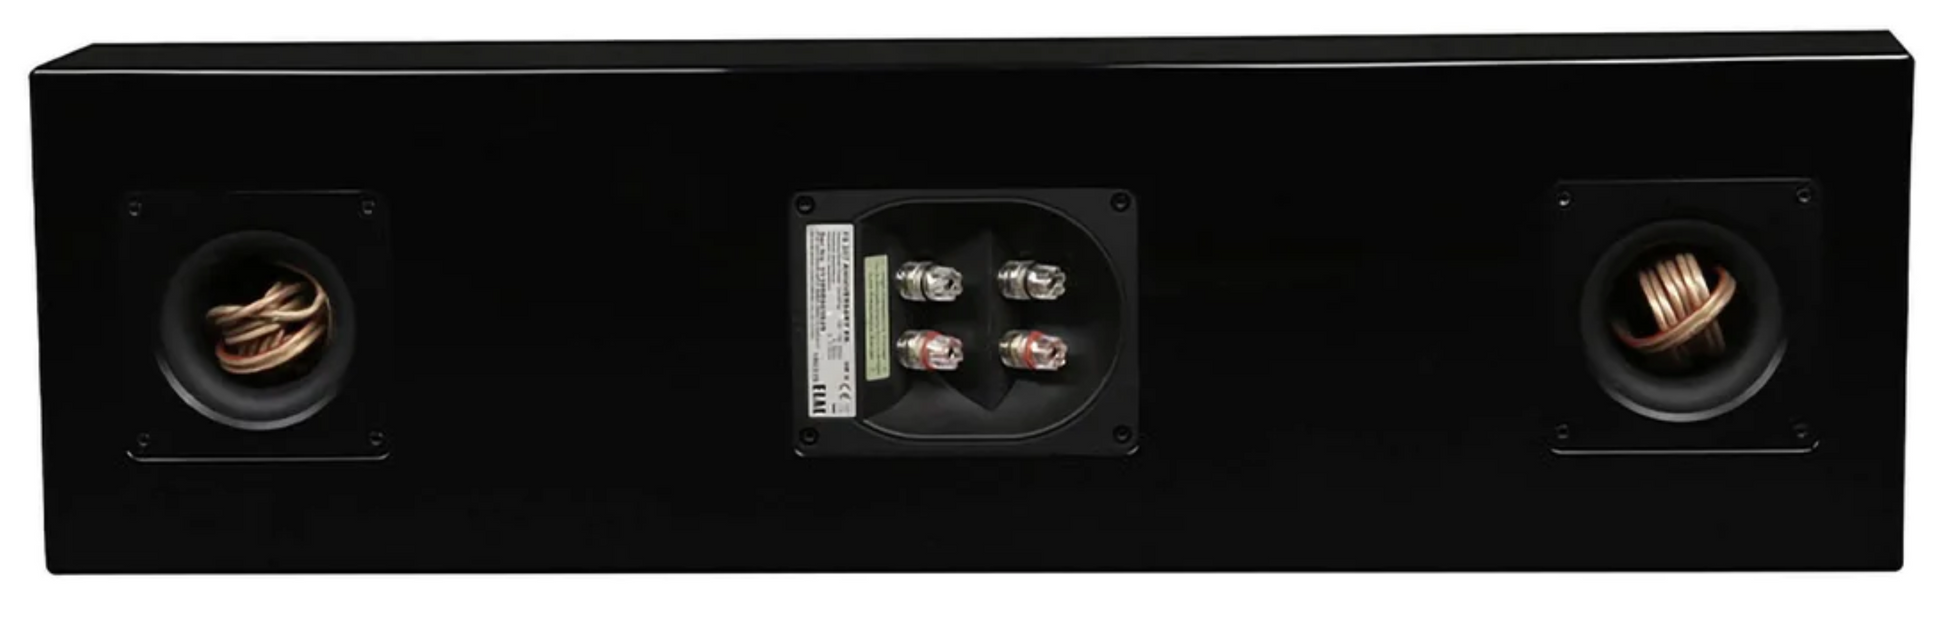 ELAC Concentro Centre Channel Speaker in black. Back panel image